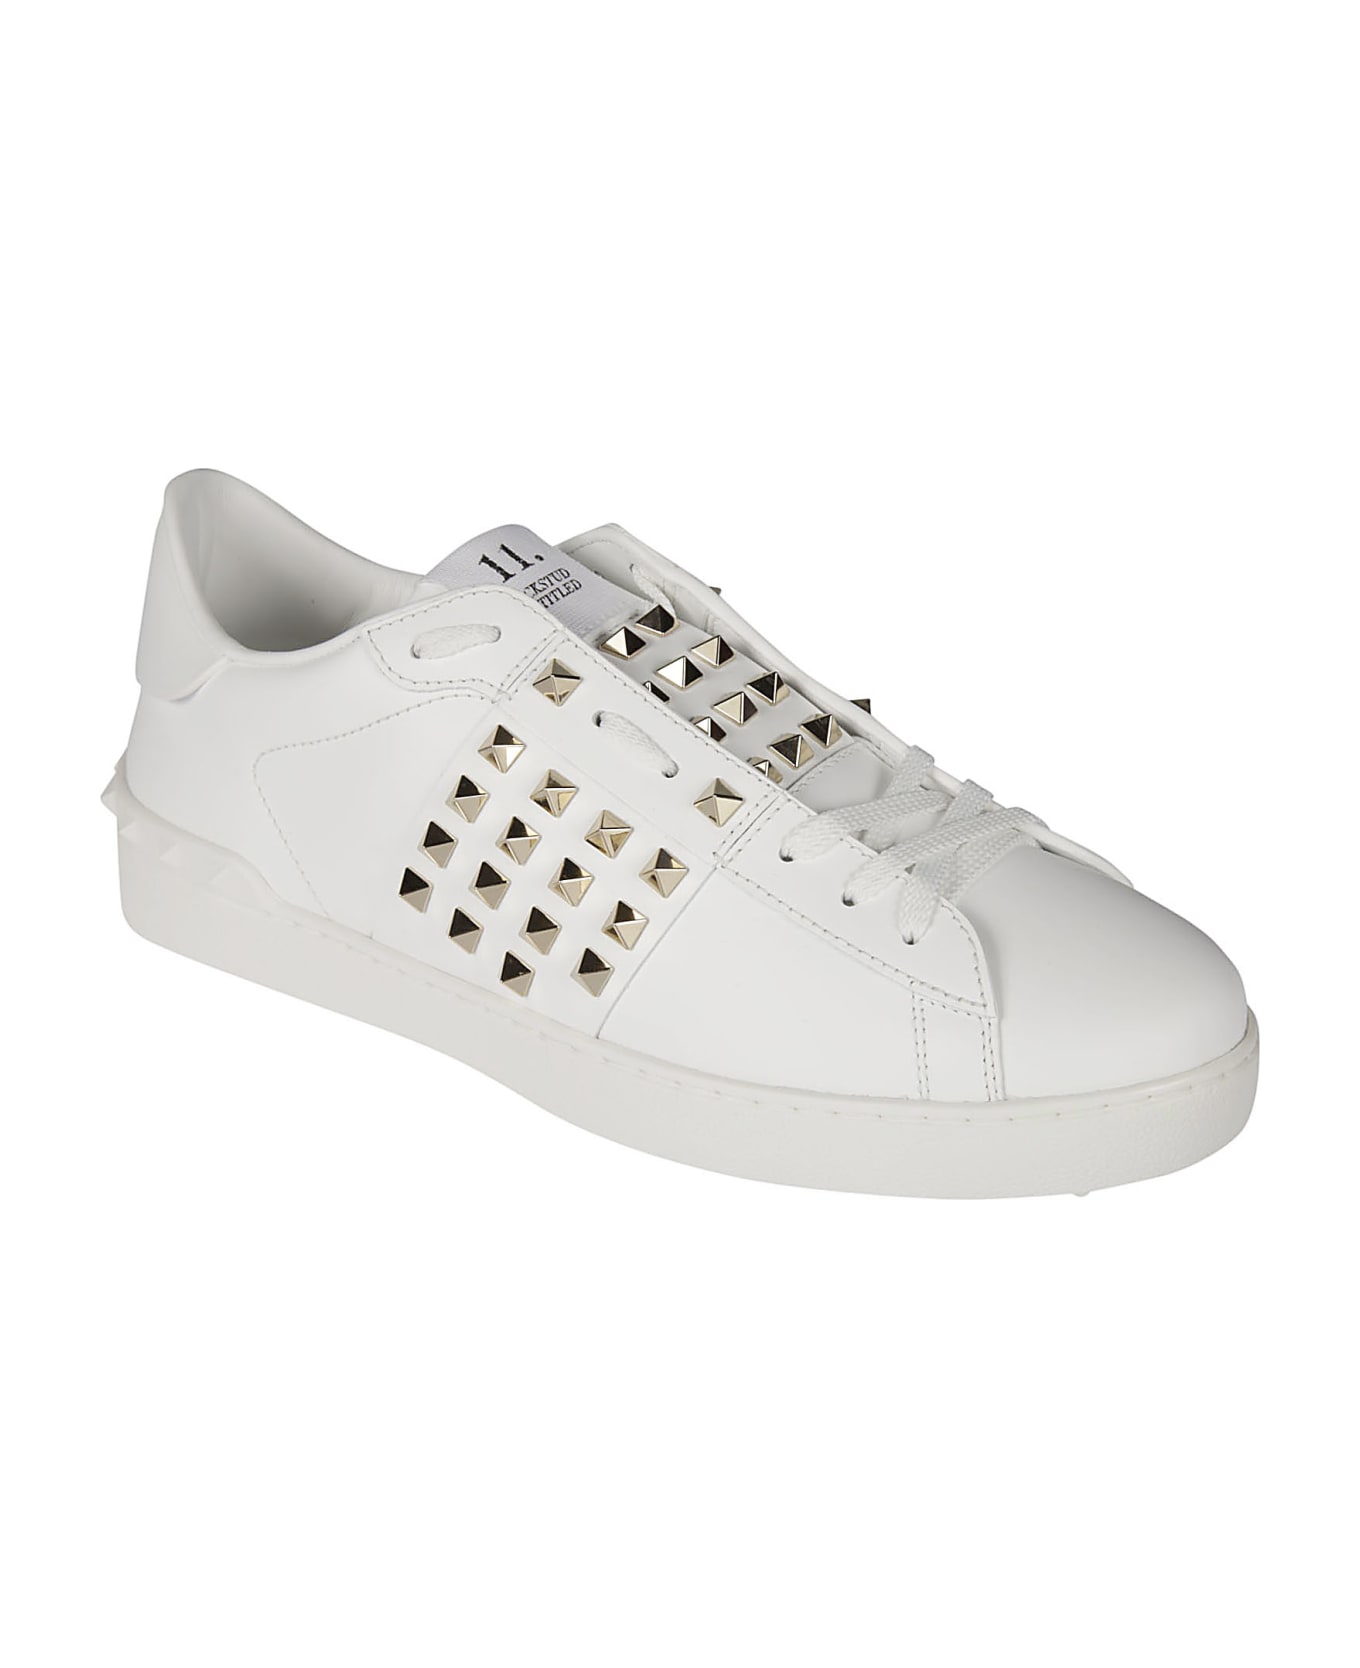 Valentino Garavani Spike Sneakers - White